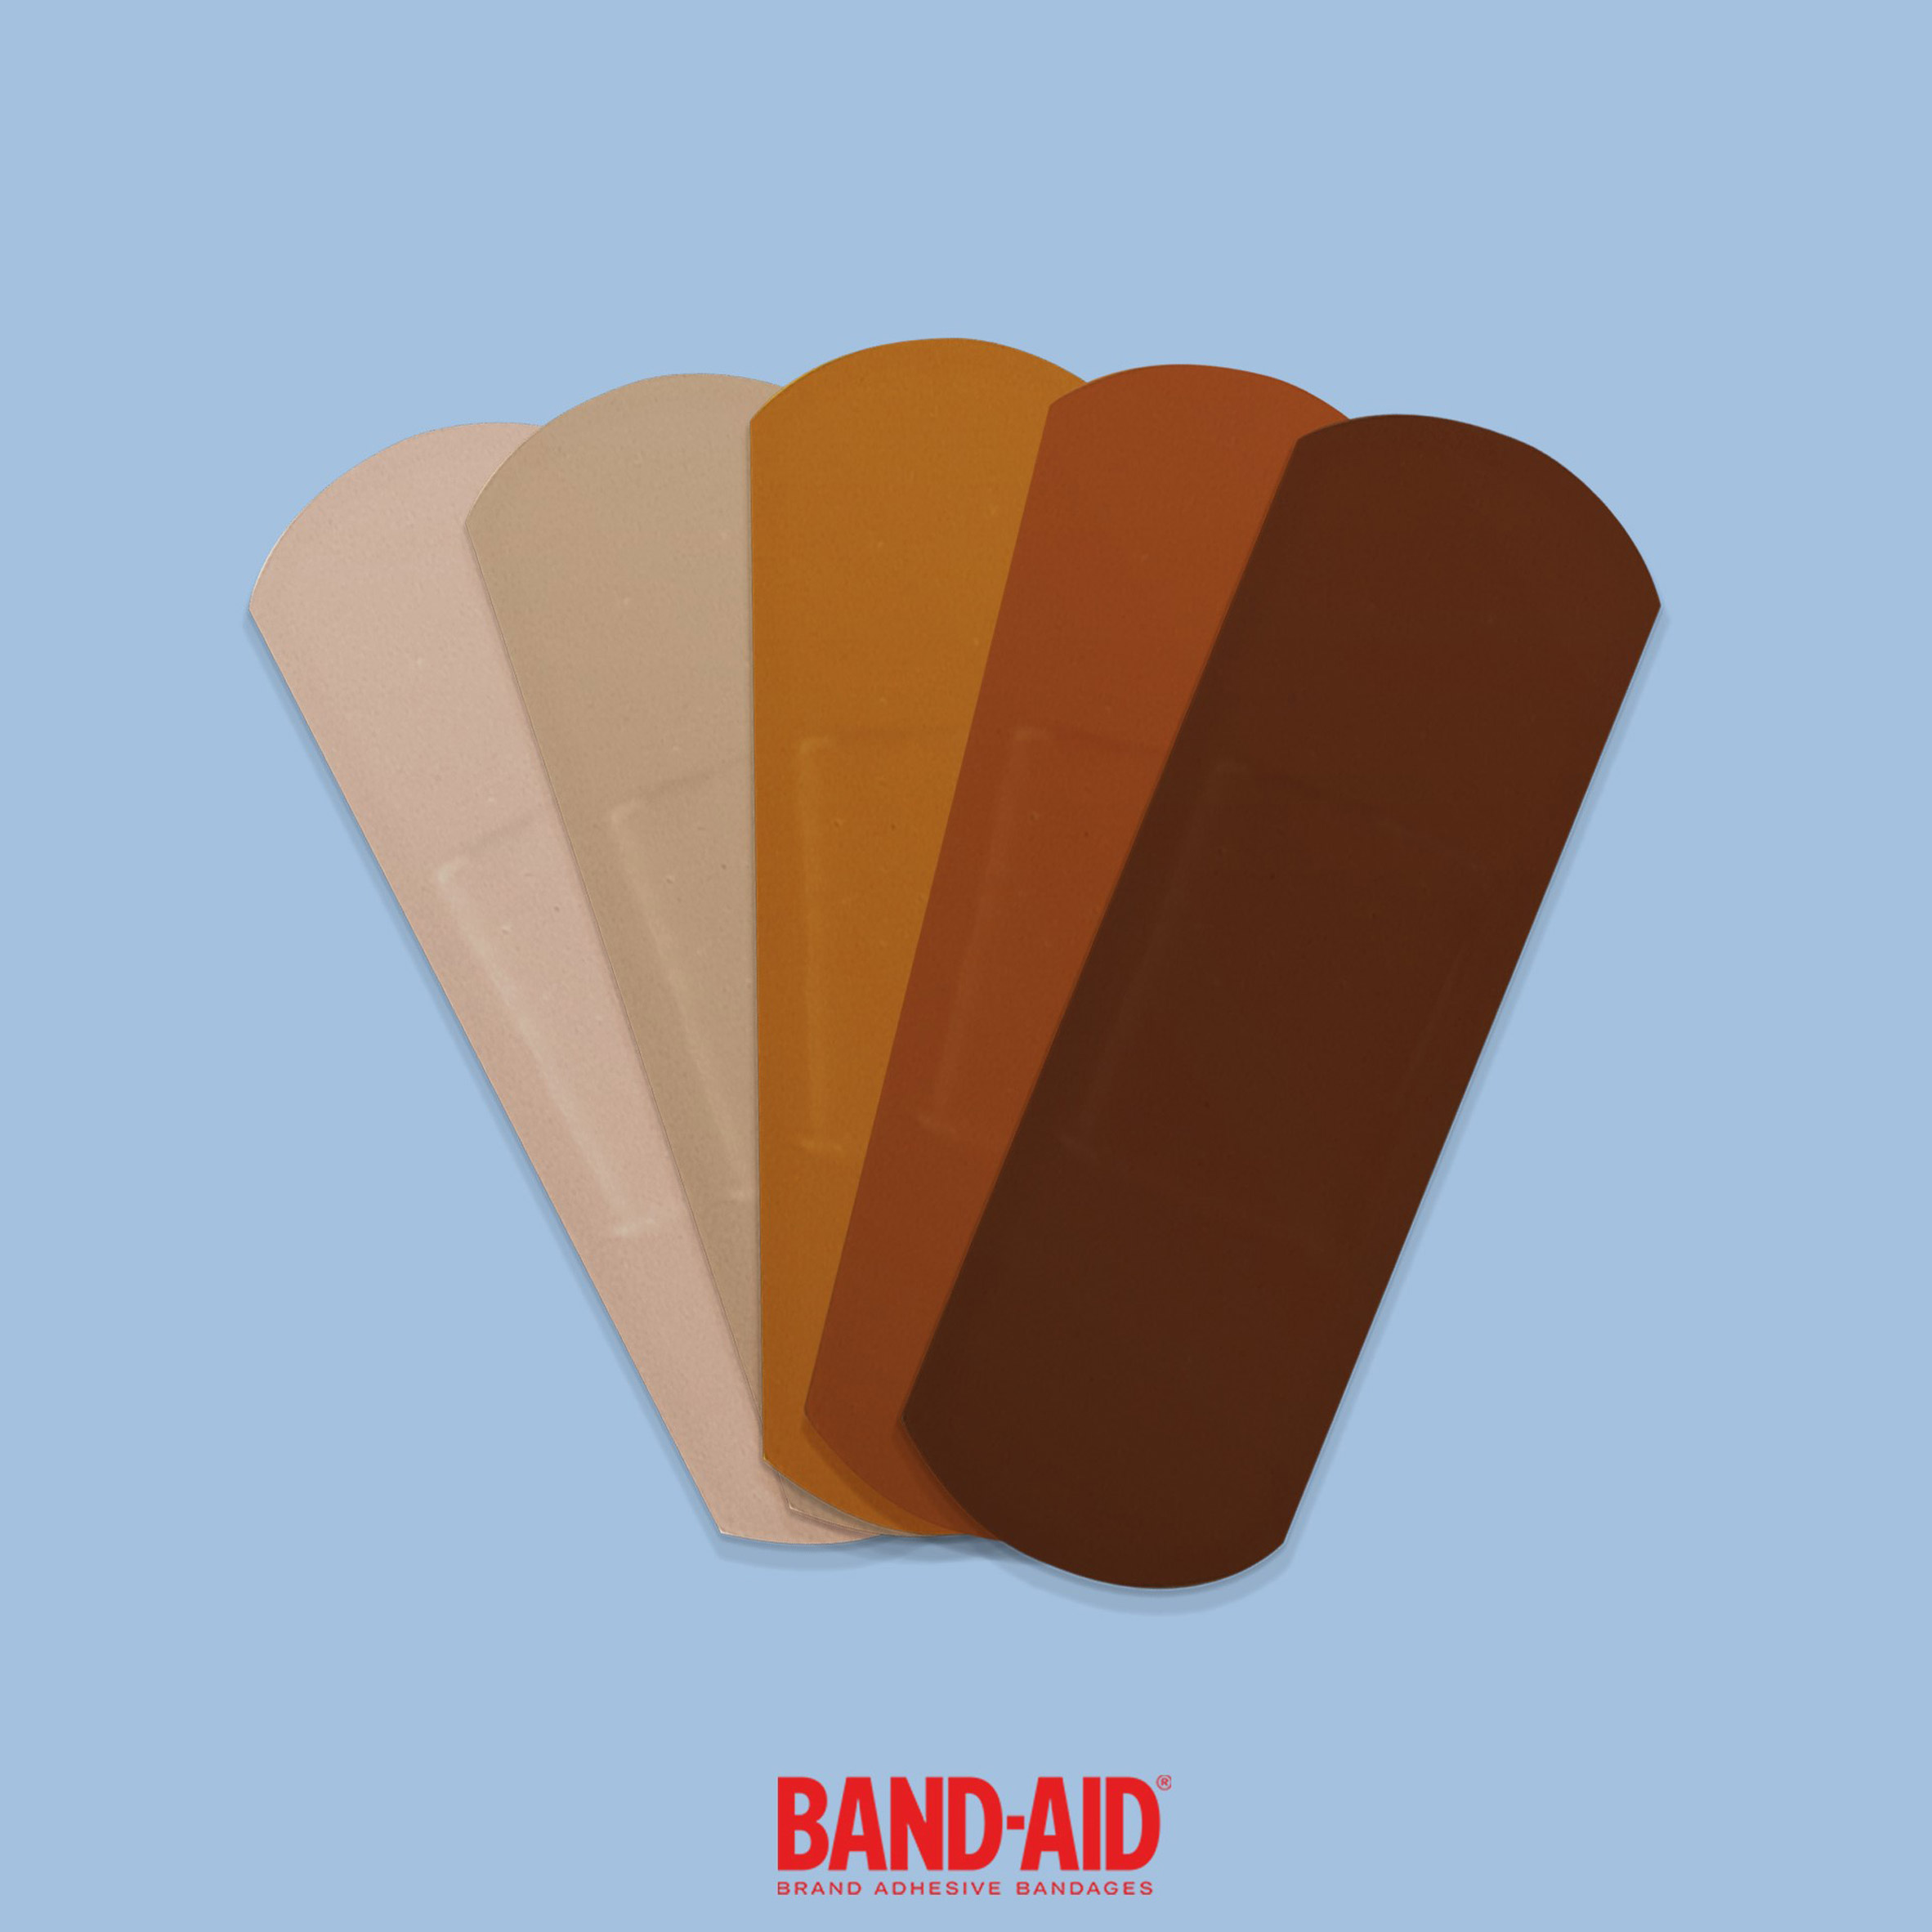 BAND-AID® Brand